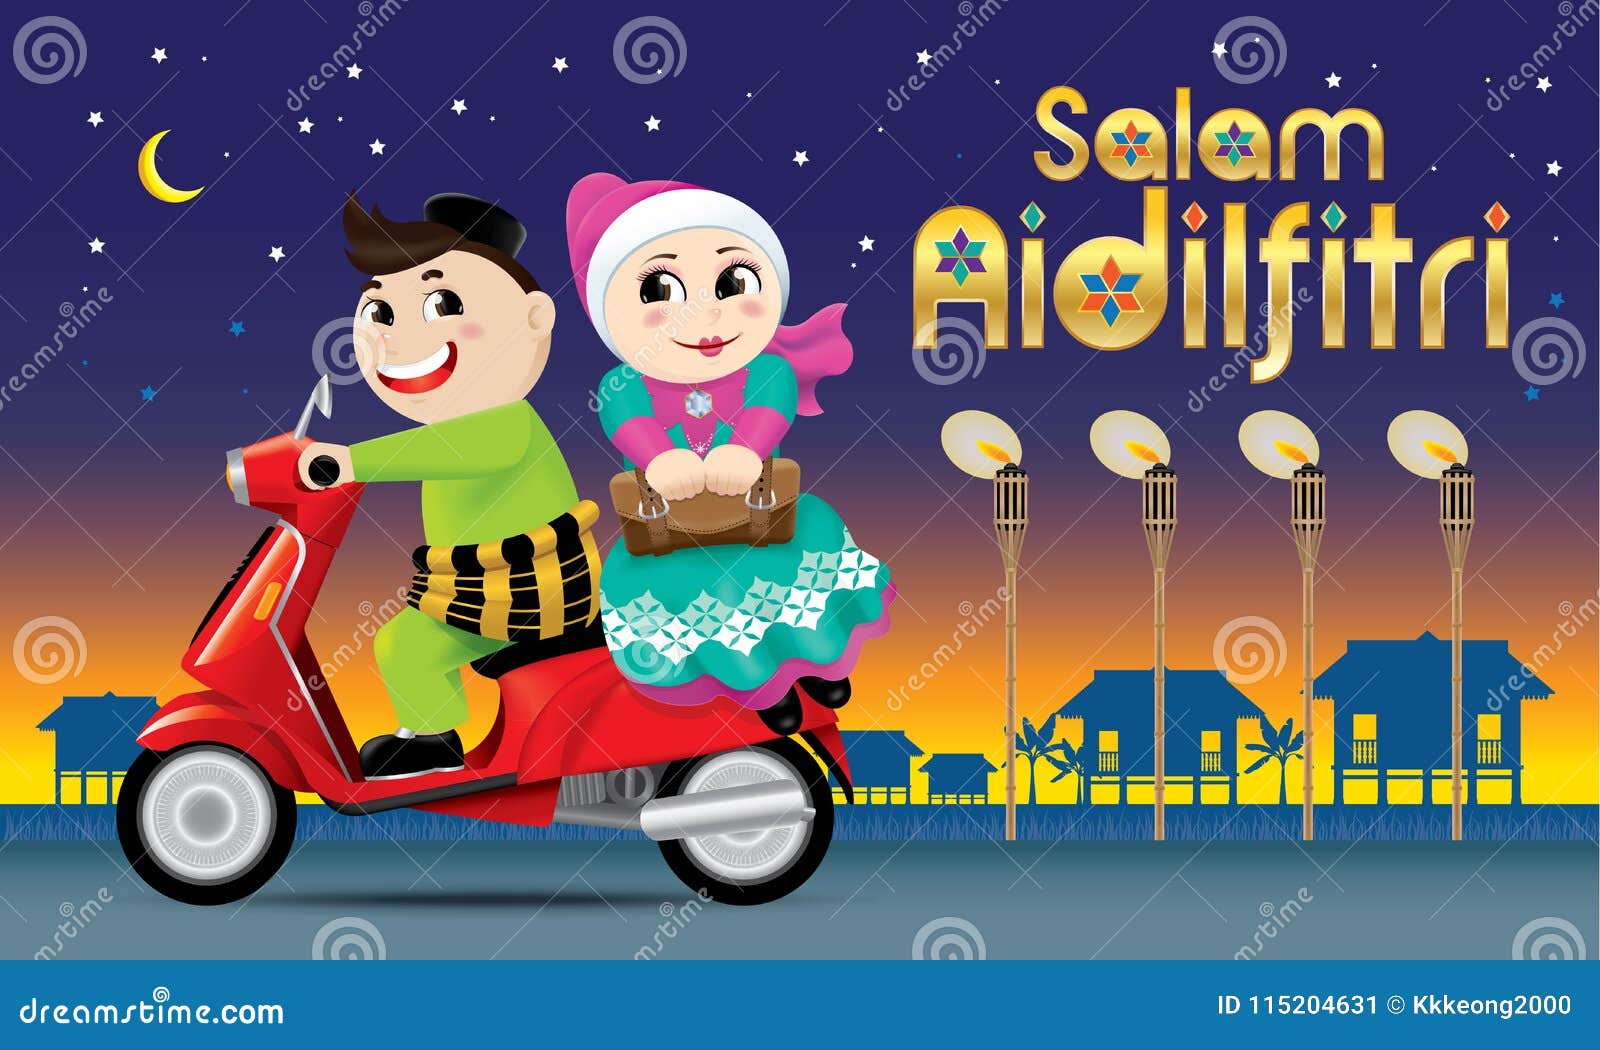 Melayu Couple Celebrating Hari Raya Aidilfitri Cartoon Vector